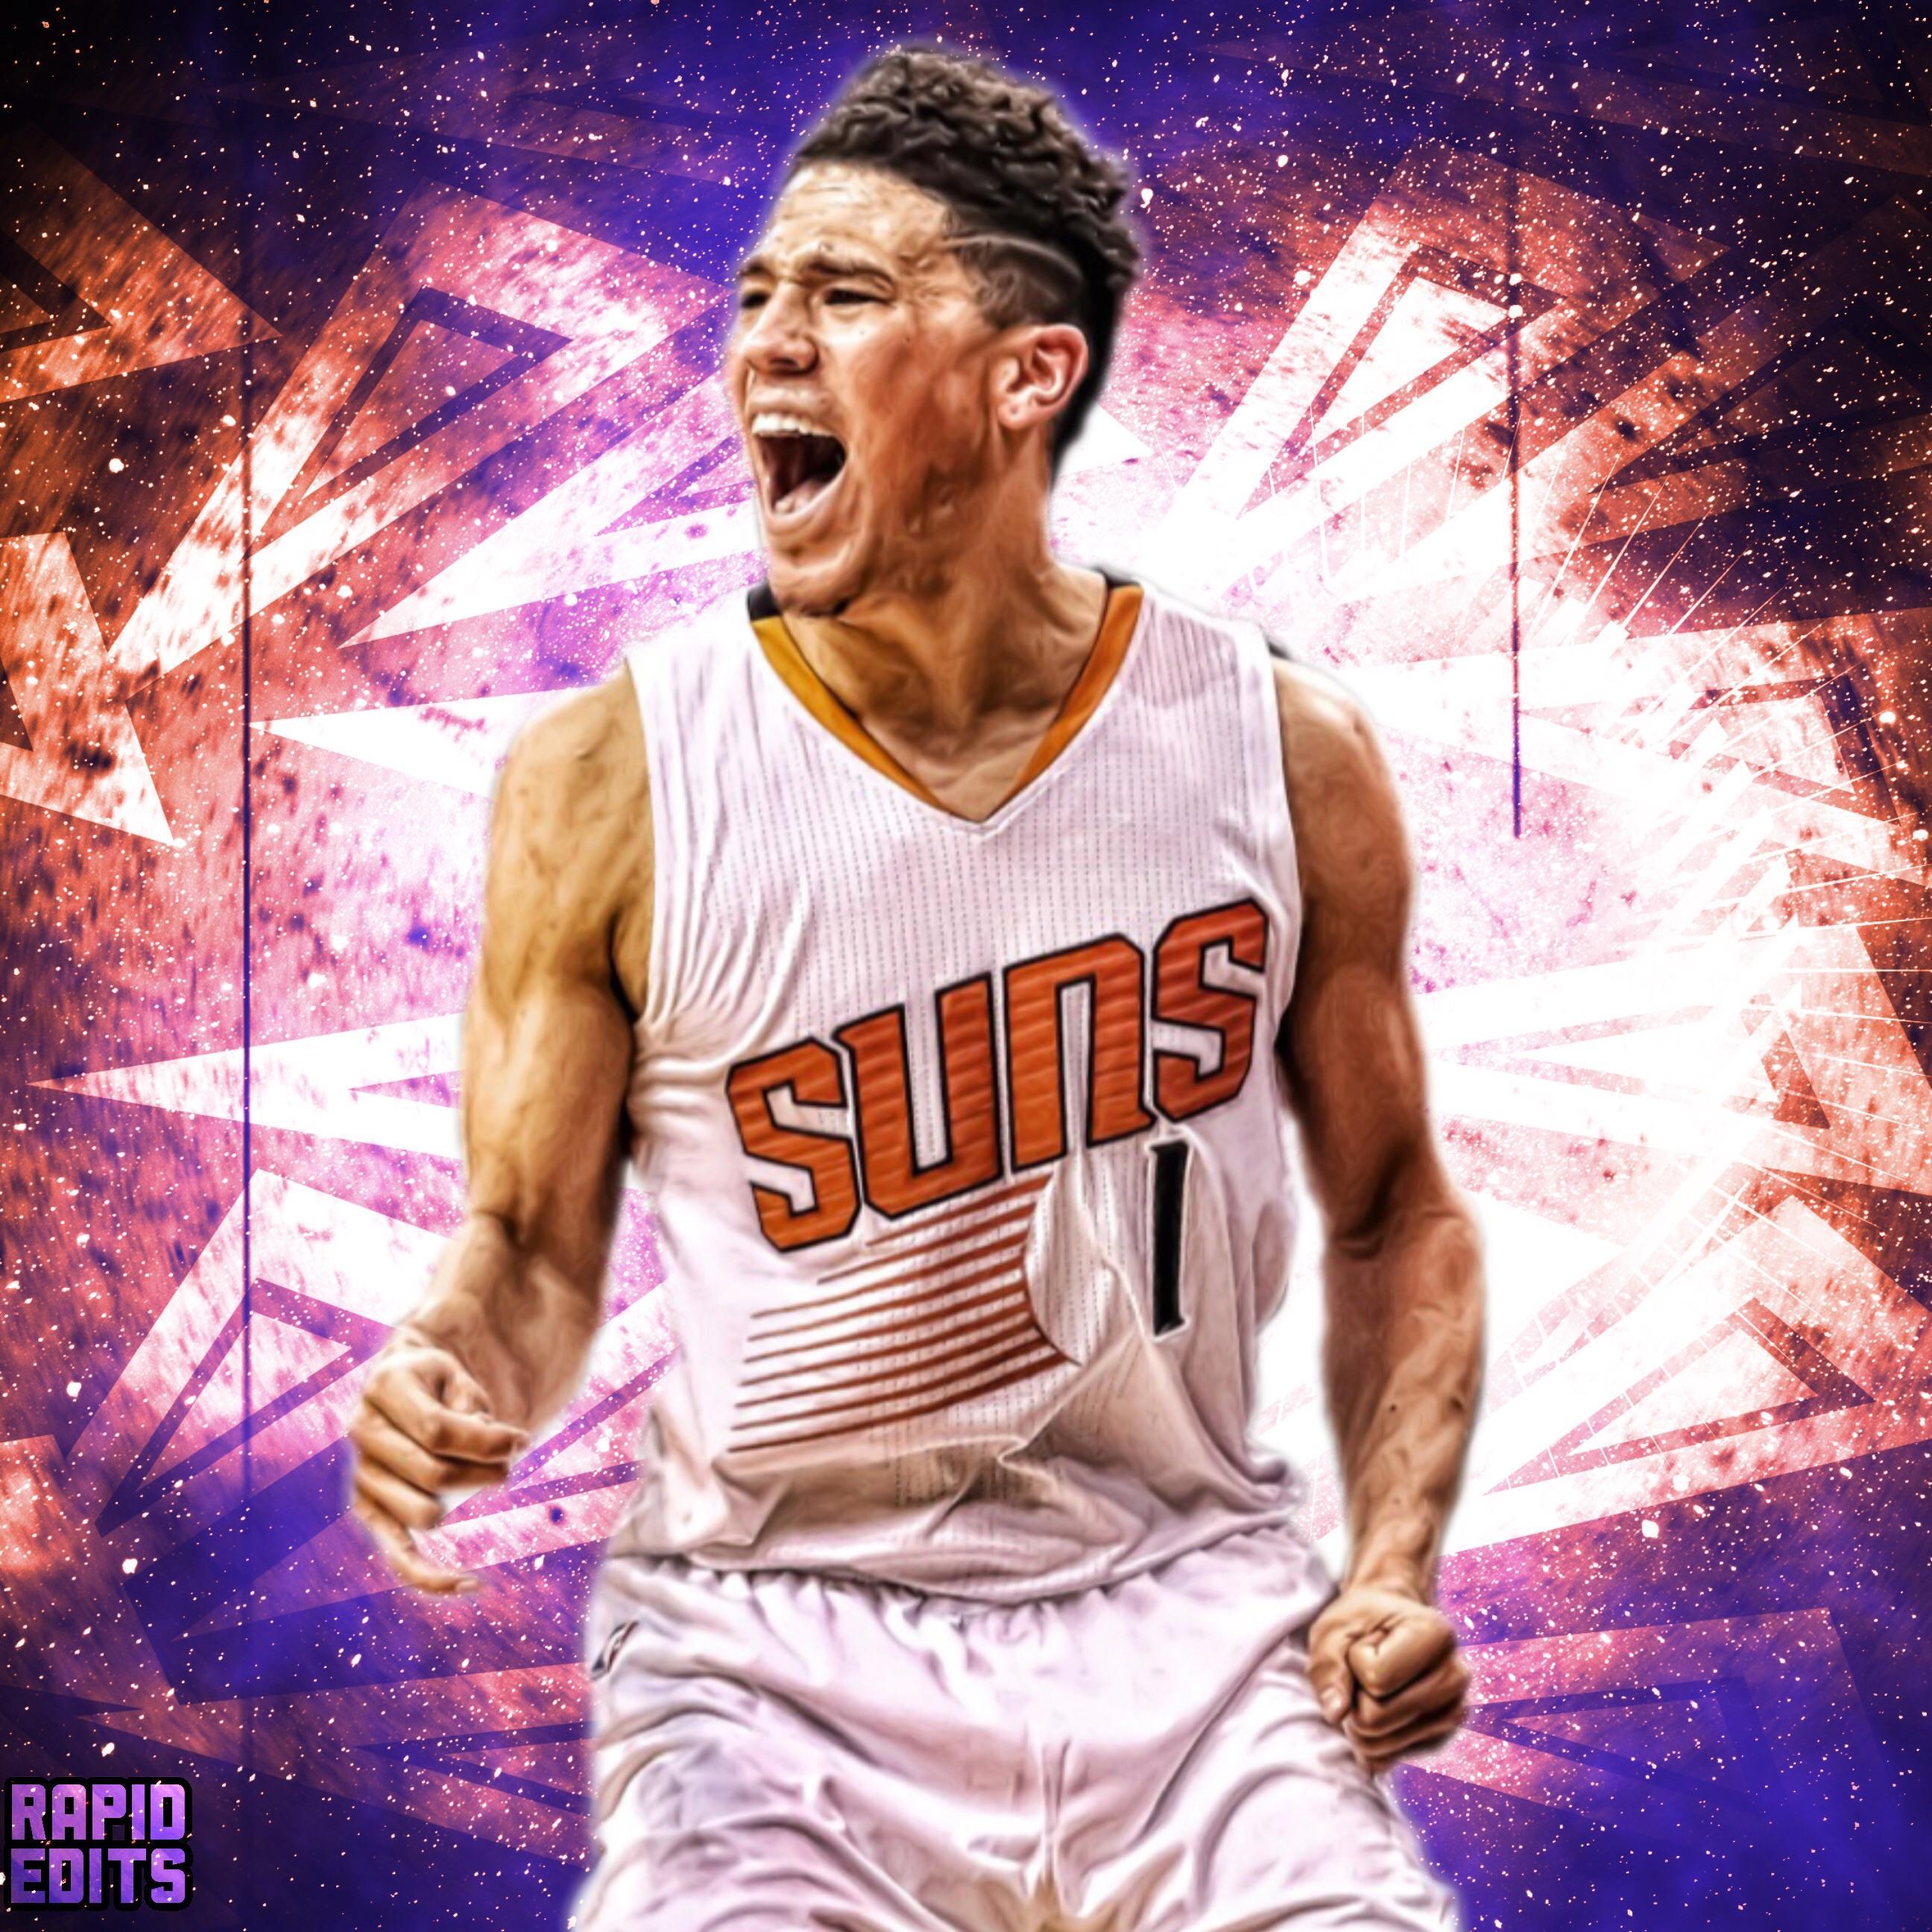 Phoenix Suns success should encourage Booker to stick around